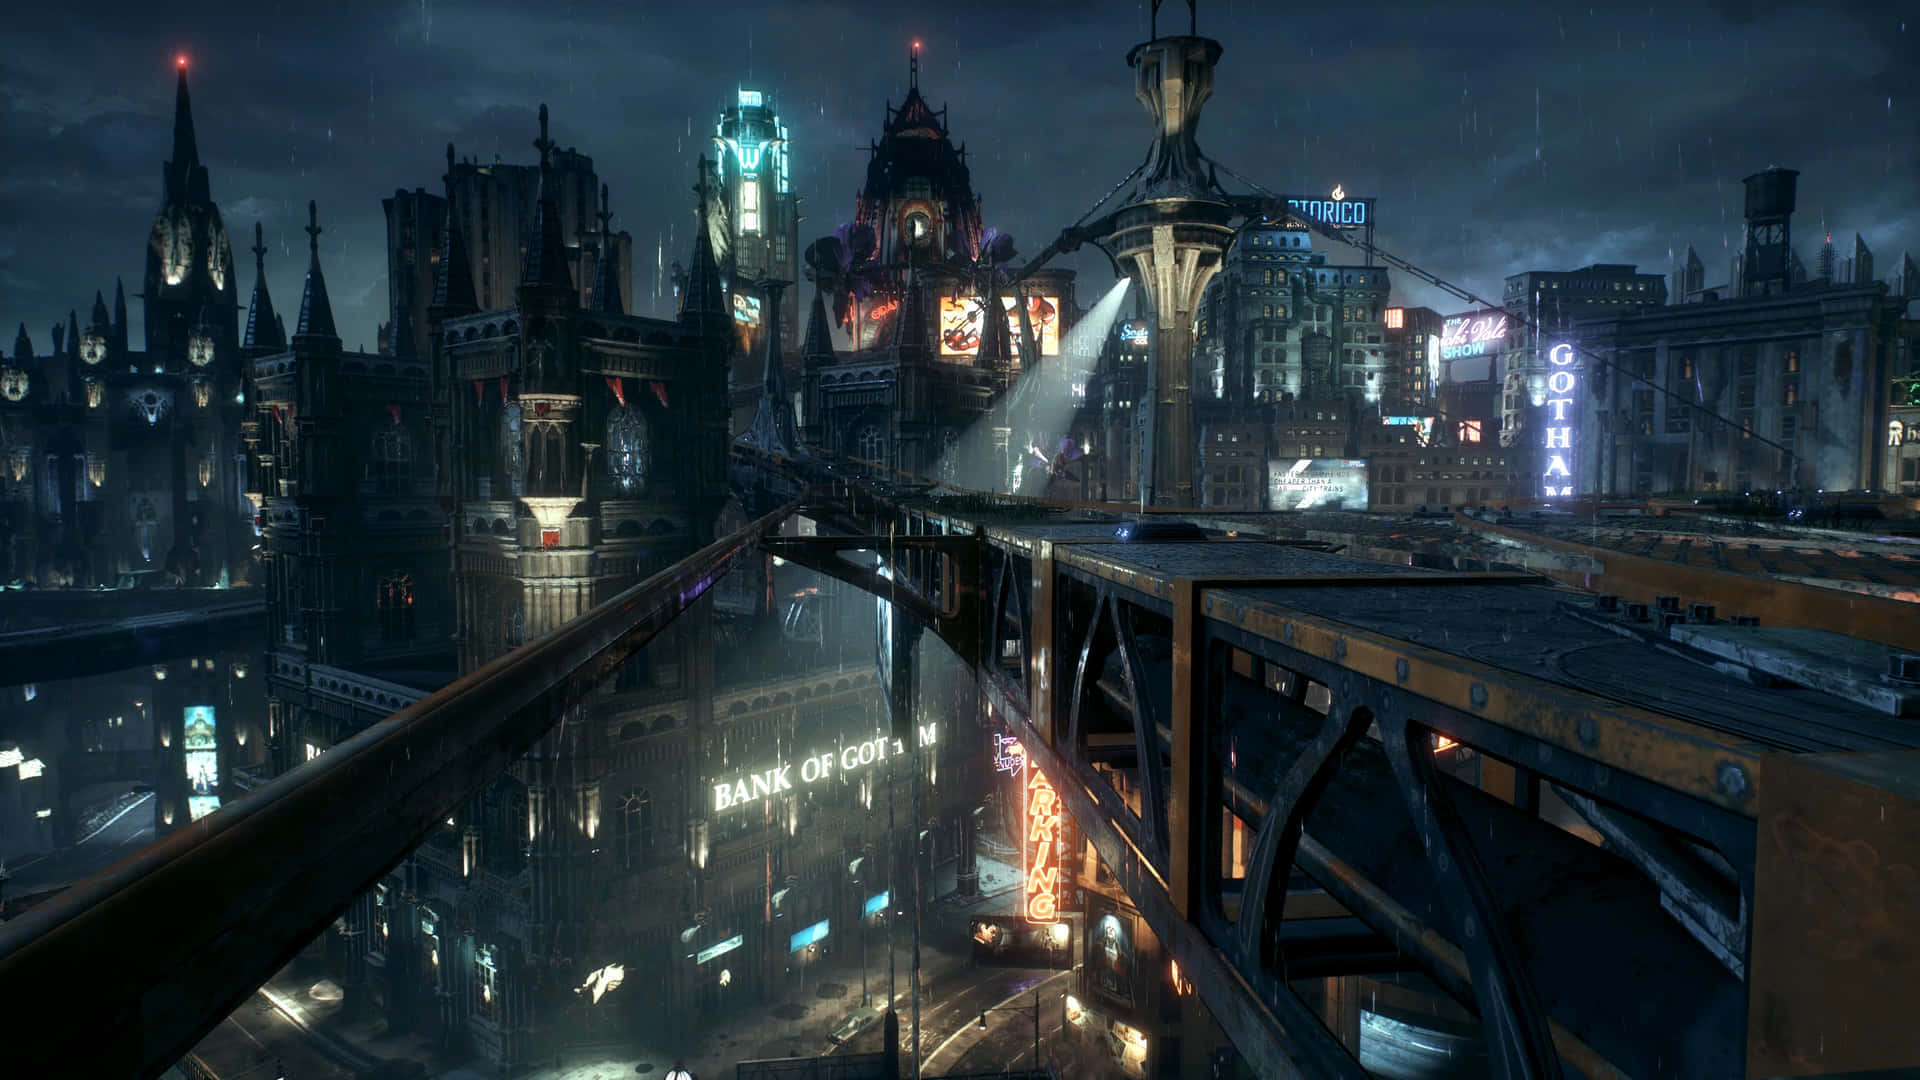 Mysterious Gotham City Nightscape